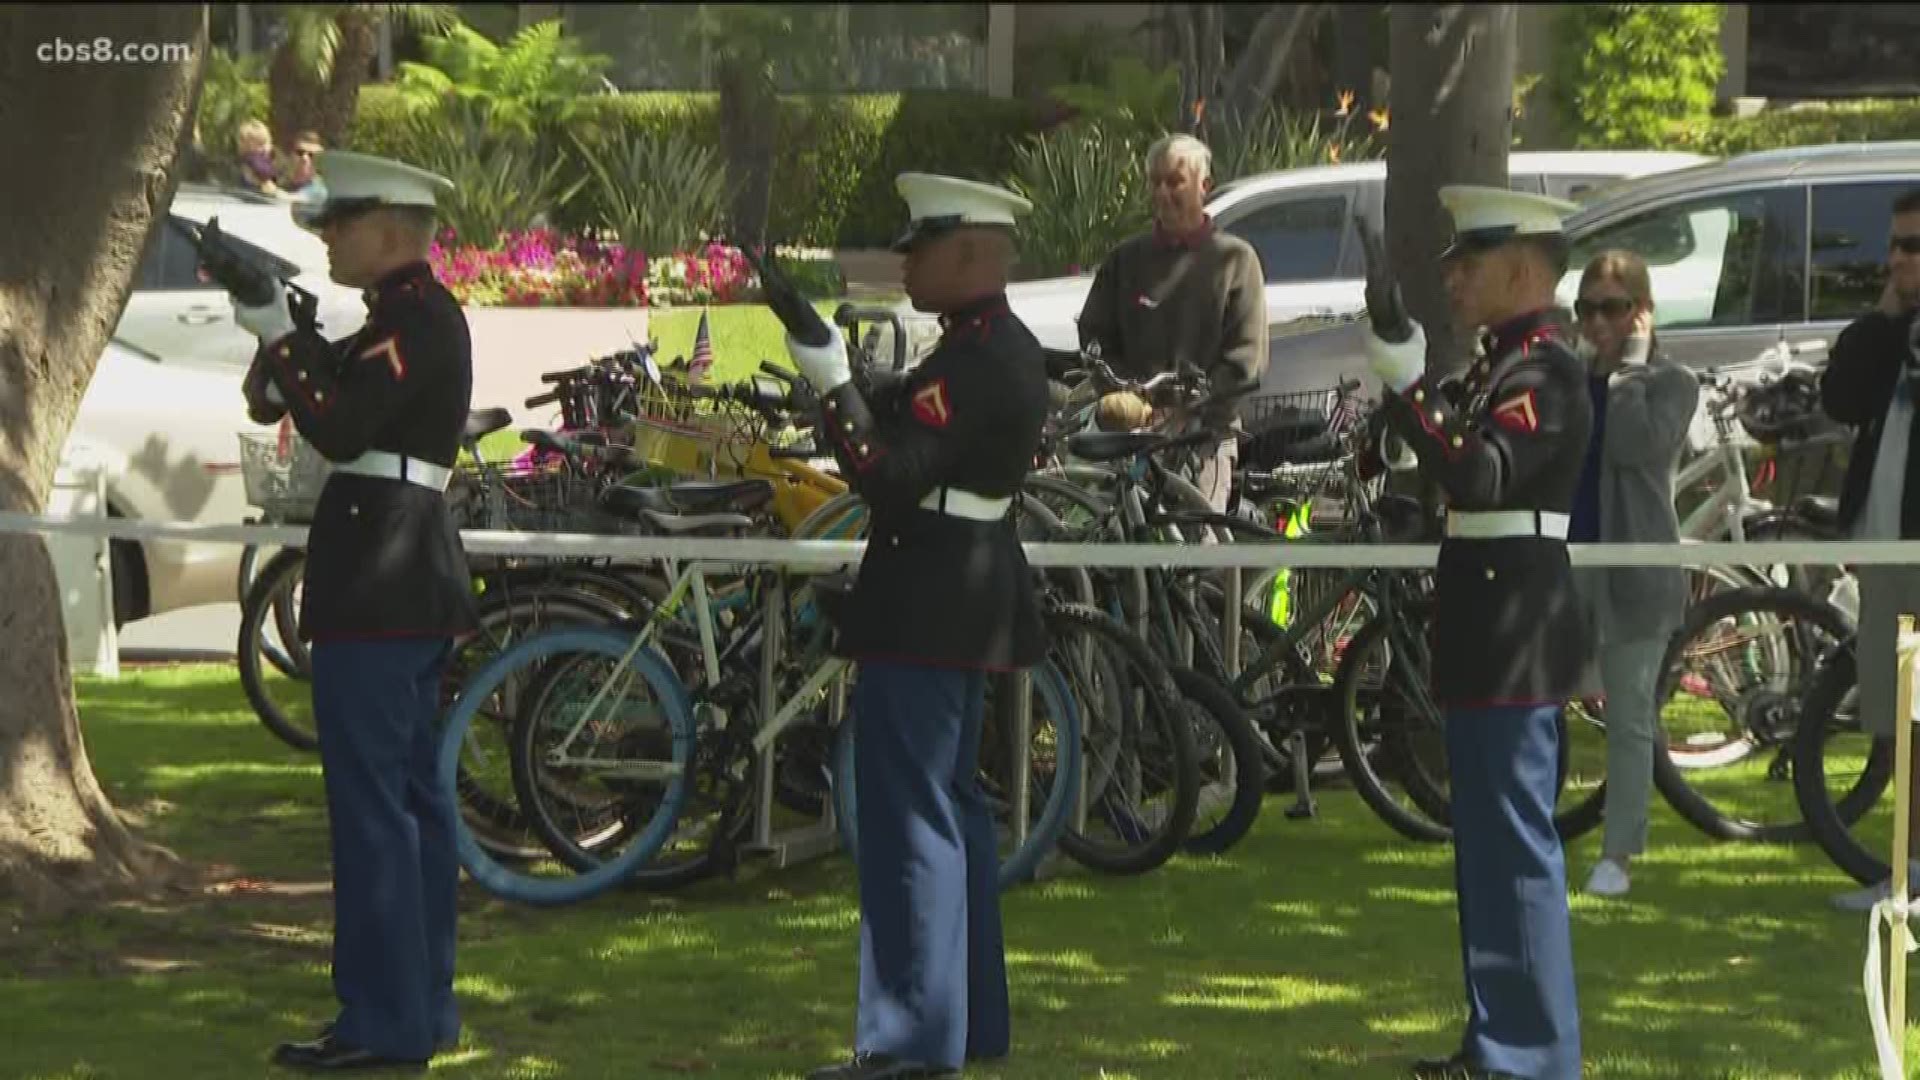 Memorial Day services held at Star Park in Coronado to honor fallen